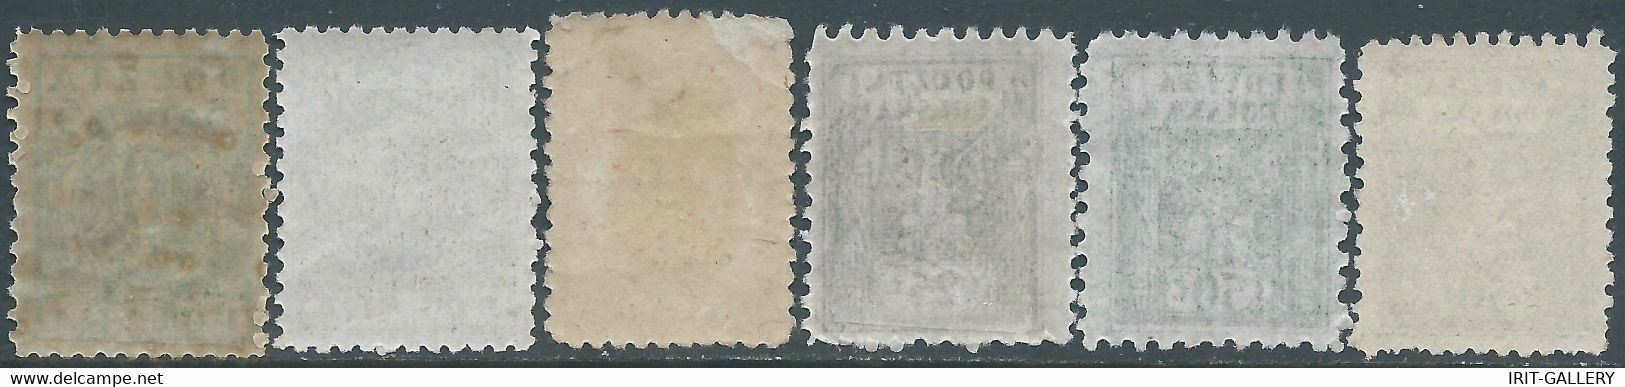 POLONIA-POLAND-POLSKA,1919 North Poland Issues,Mint - Unused Stamps